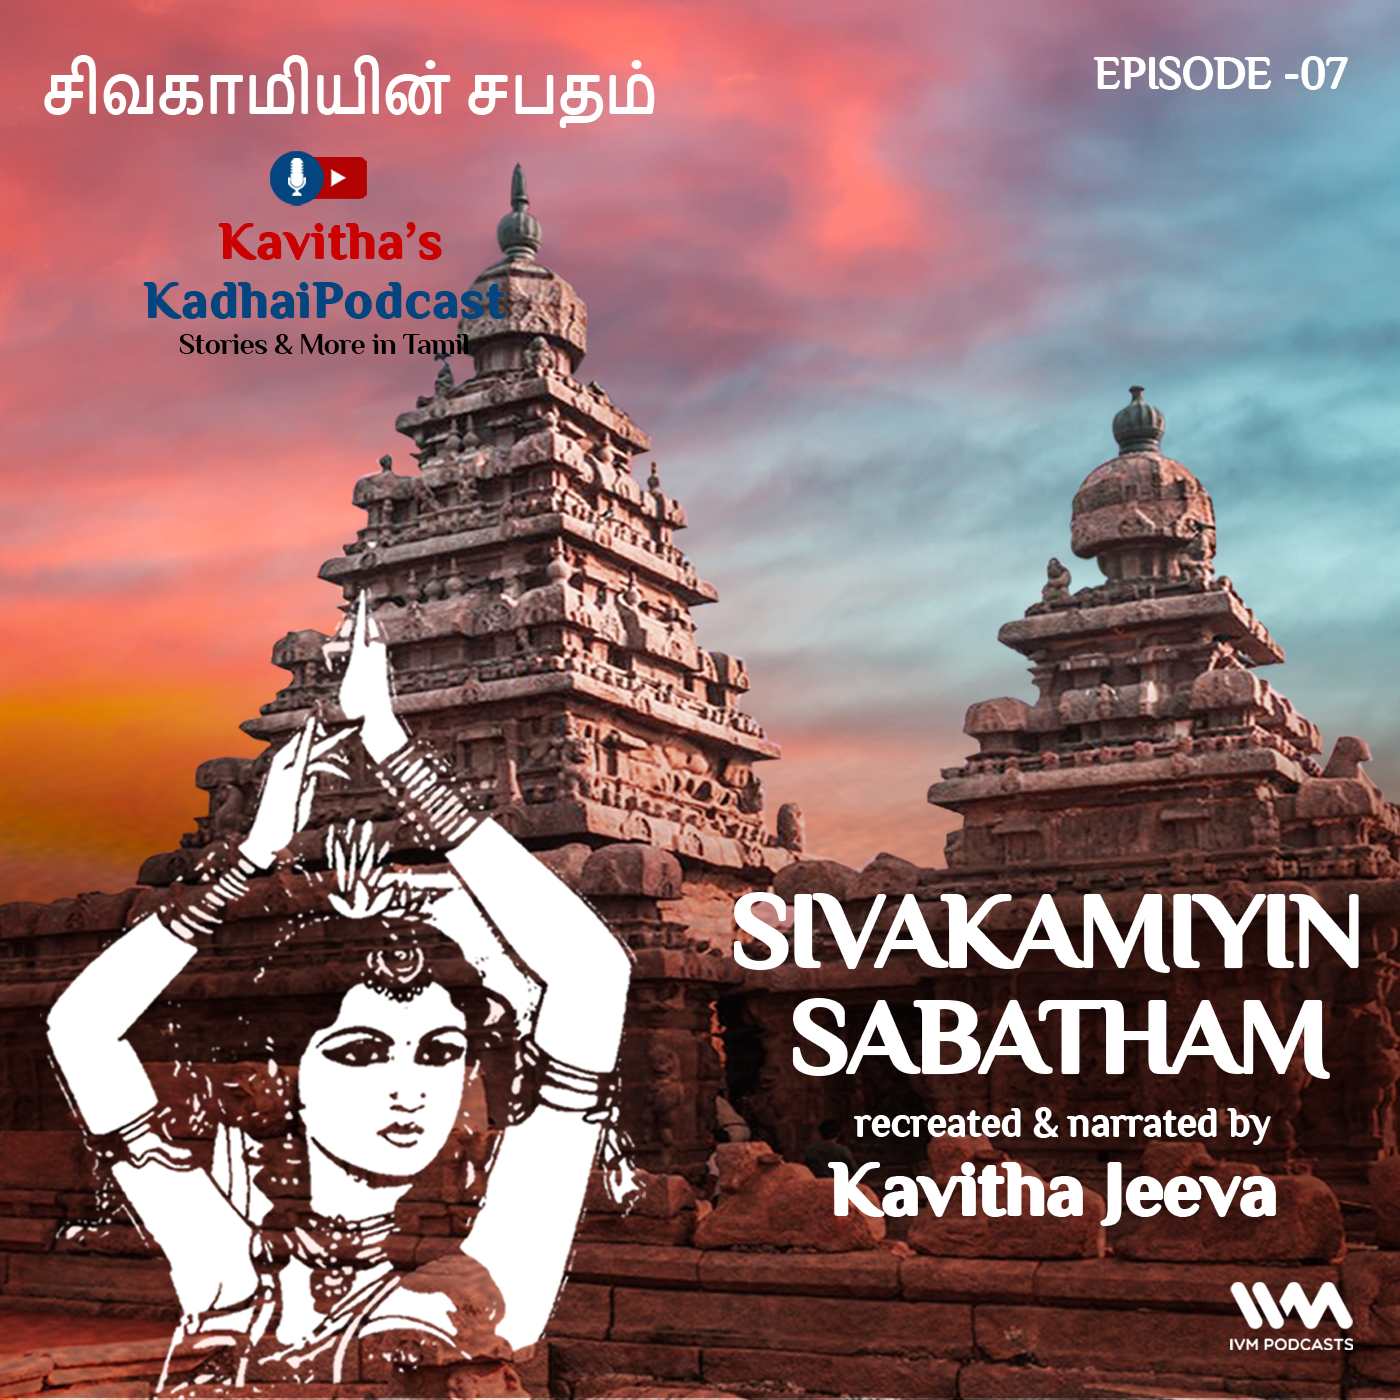 KadhaiPodcast's Sivakamiyin Sabatham - Episode # 7